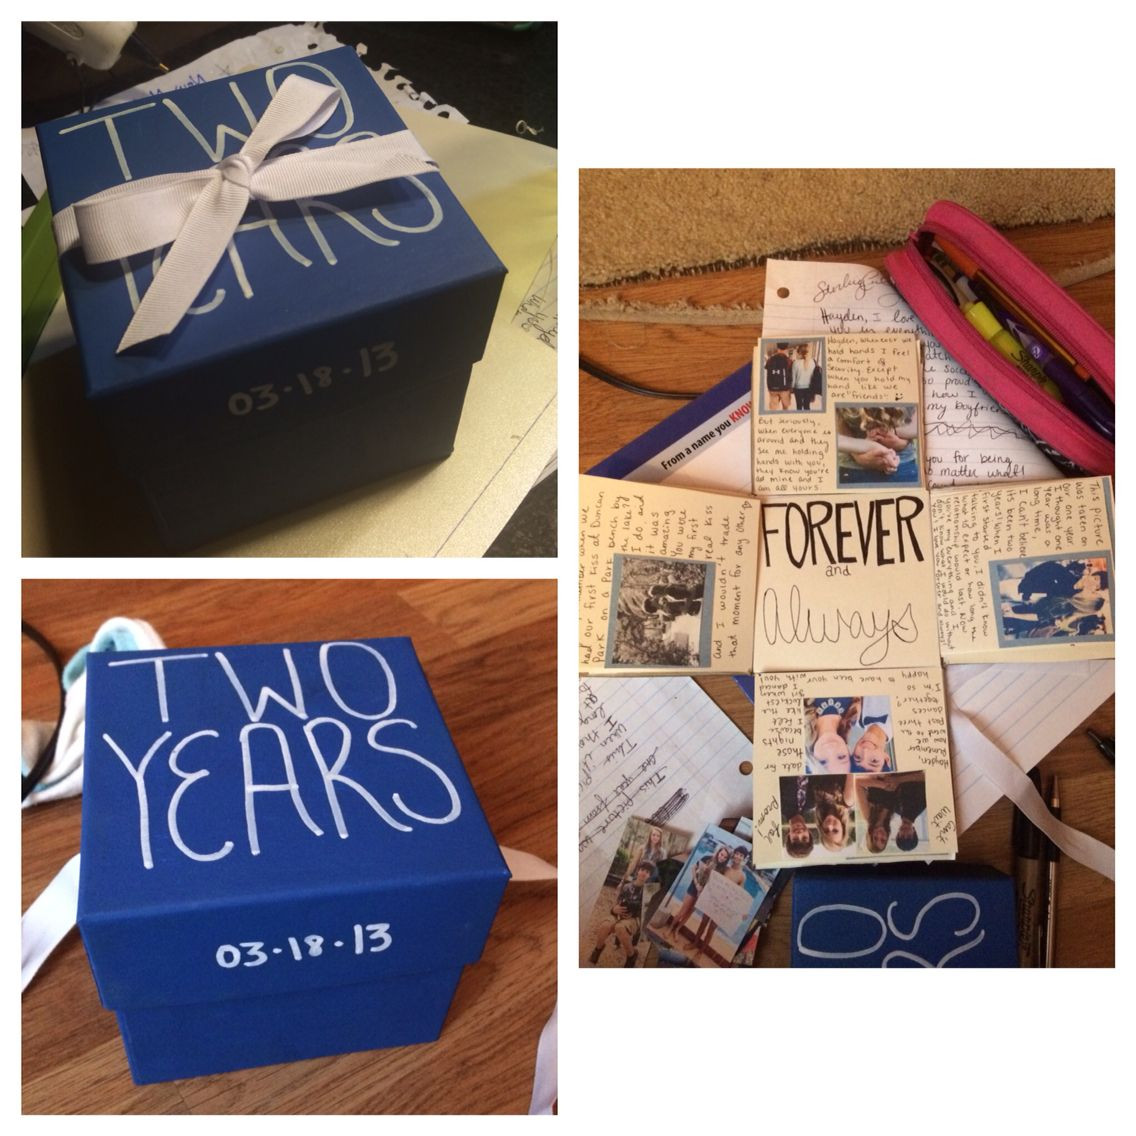 2 Yr Anniversary Gift Ideas
 2 Year Anniversary Gift Ideas For Boyfriend